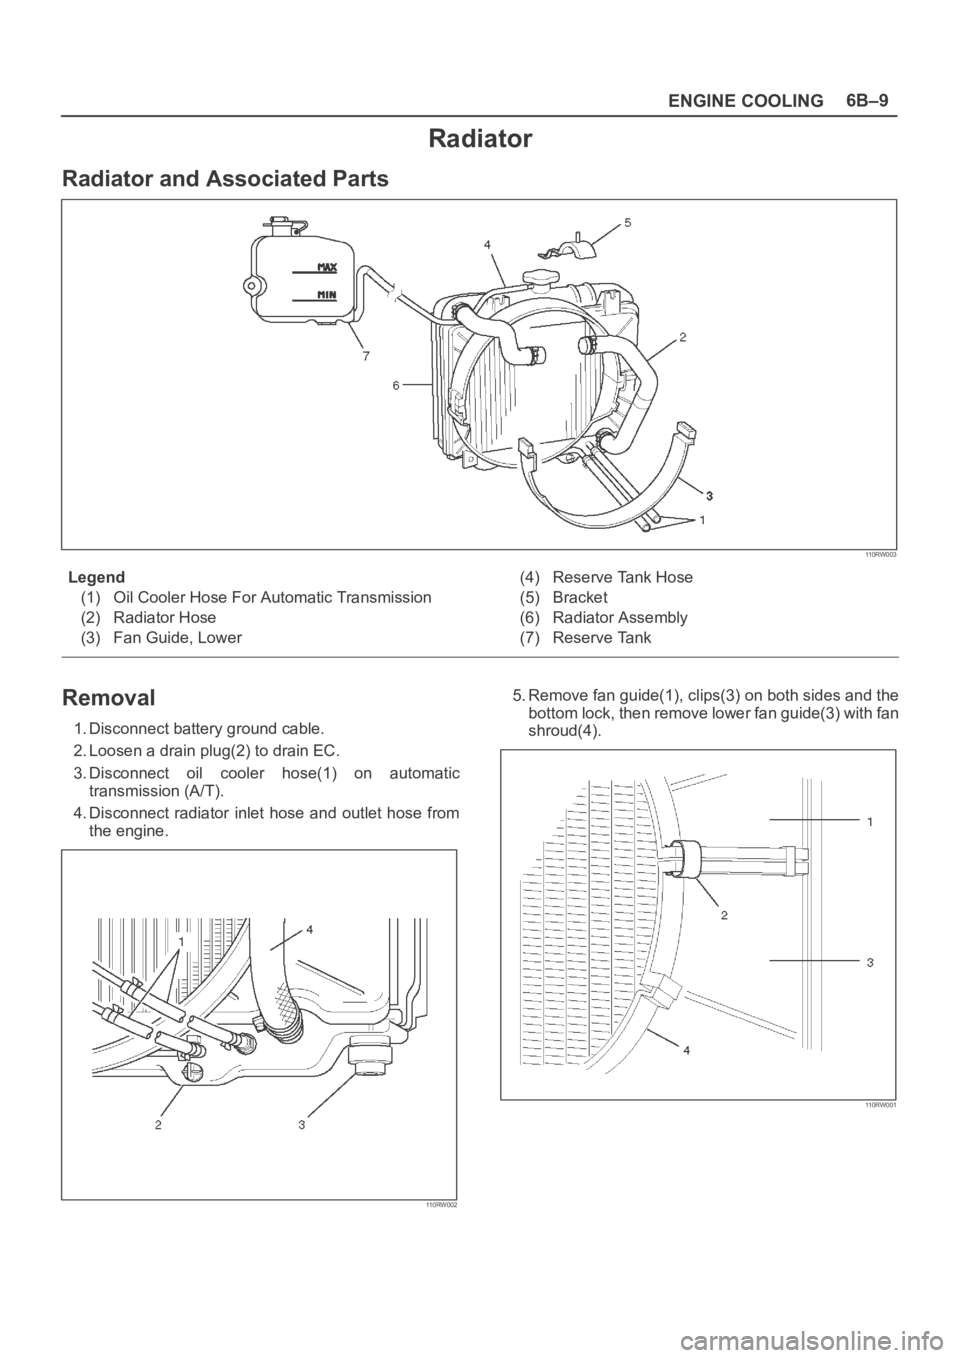 OPEL FRONTERA 1998  Workshop Manual ENGINE COOLING6B–9
Radiator
Radiator and Associated Parts
110RW003
Legend
(1) Oil Cooler Hose For Automatic Transmission
(2) Radiator Hose
(3) Fan Guide, Lower(4) Reserve Tank Hose
(5) Bracket
(6) R